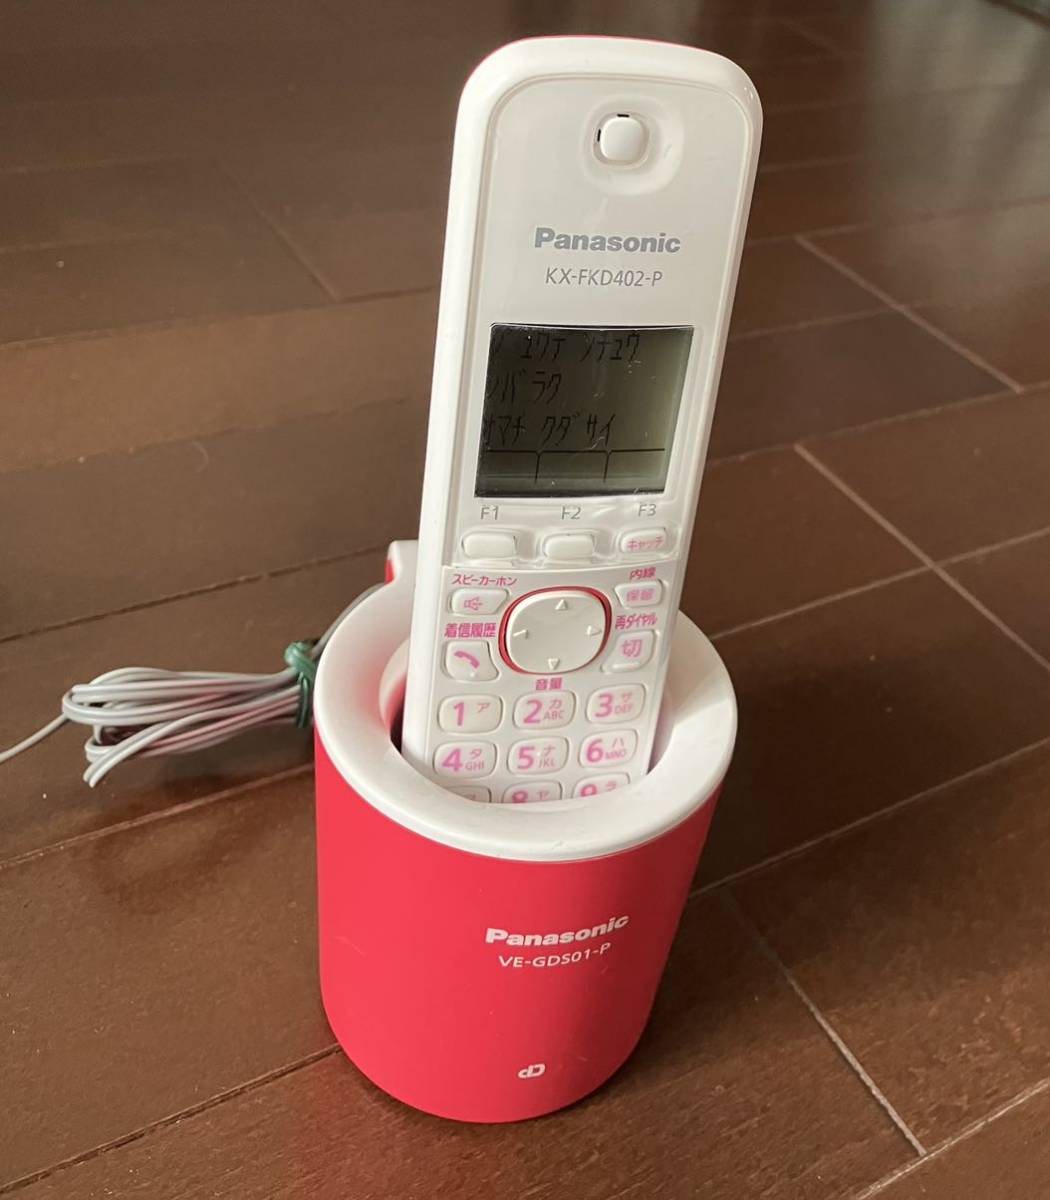 Panasonic コードレス 電話機 VE-GD501-P かわいいピンクの電話機 送料